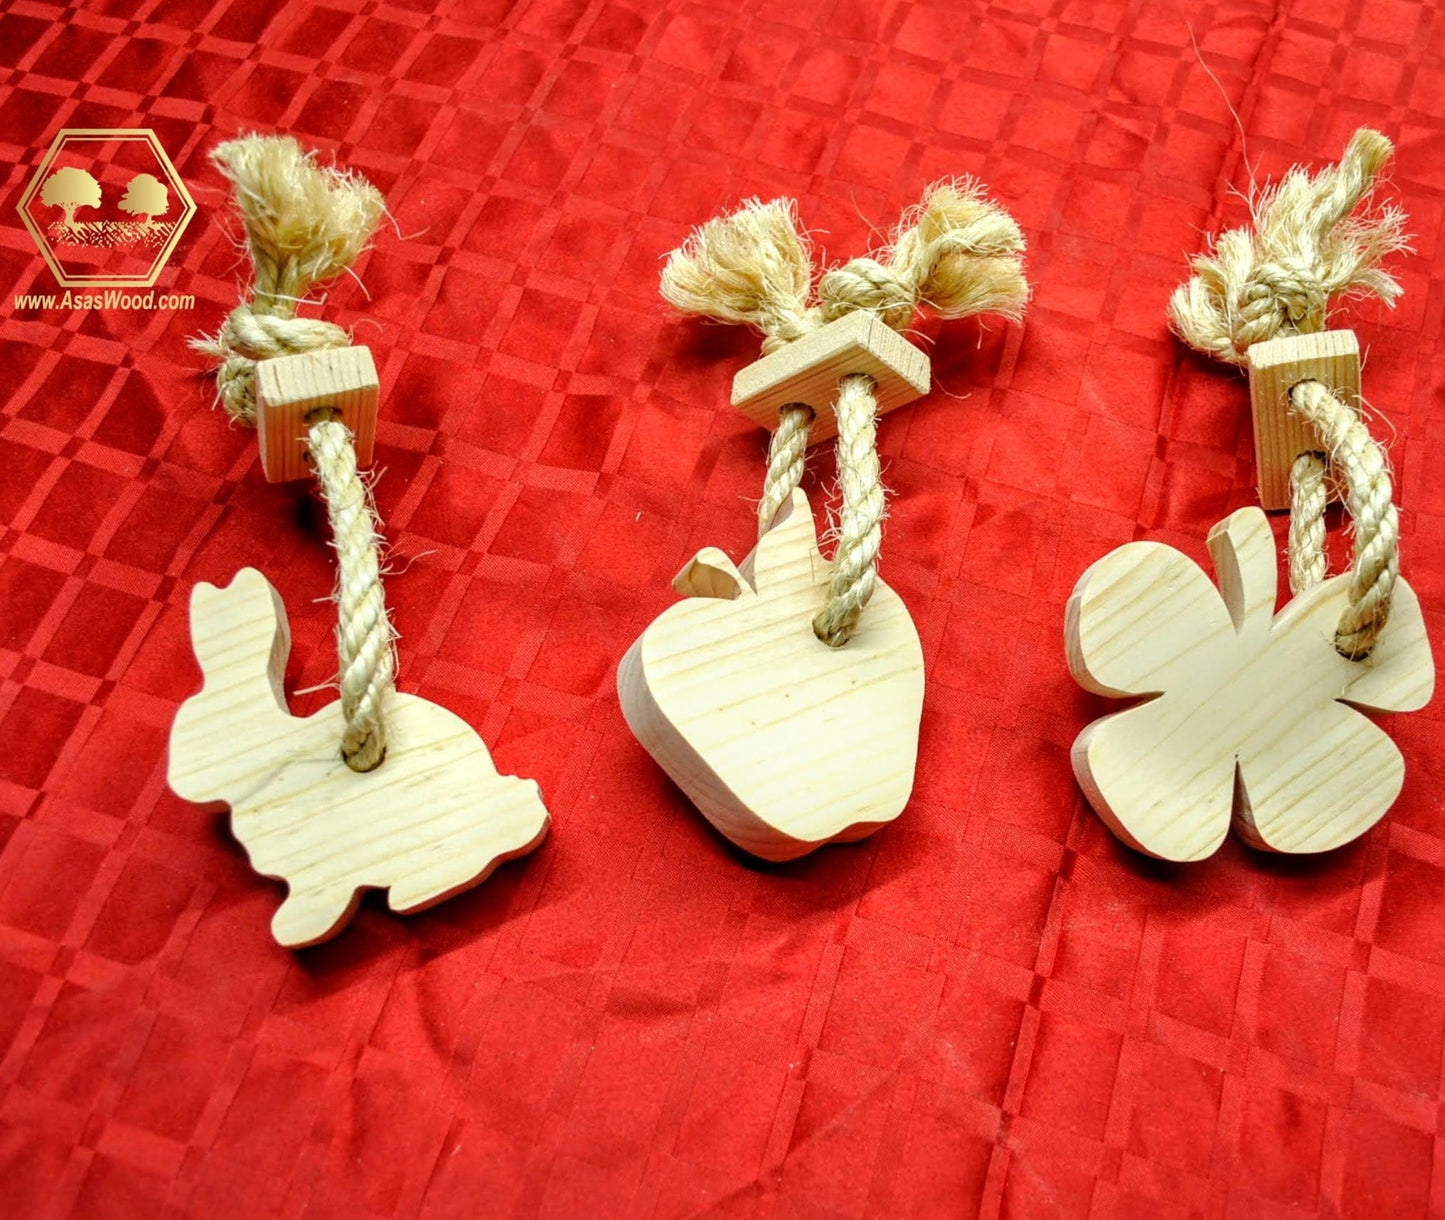 bunny rabbit toys, set of three toys, made by asaswood